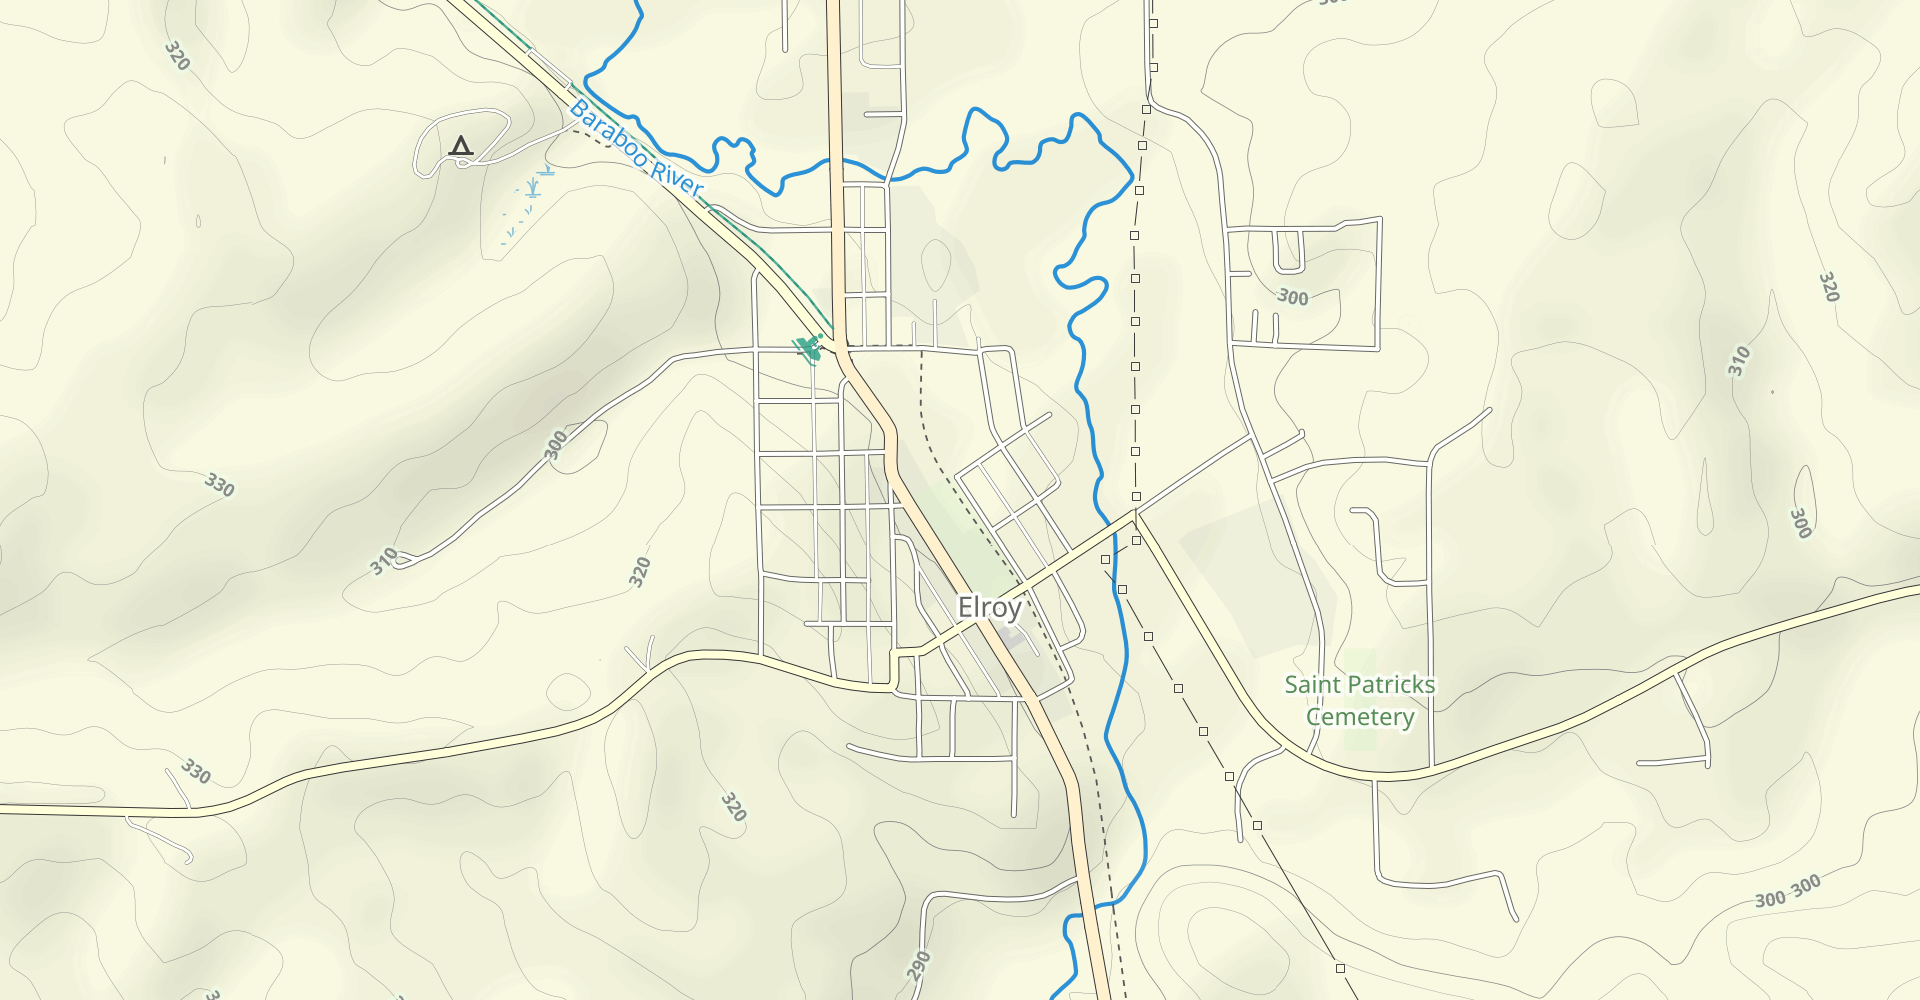 Elroy-Sparta State Trail